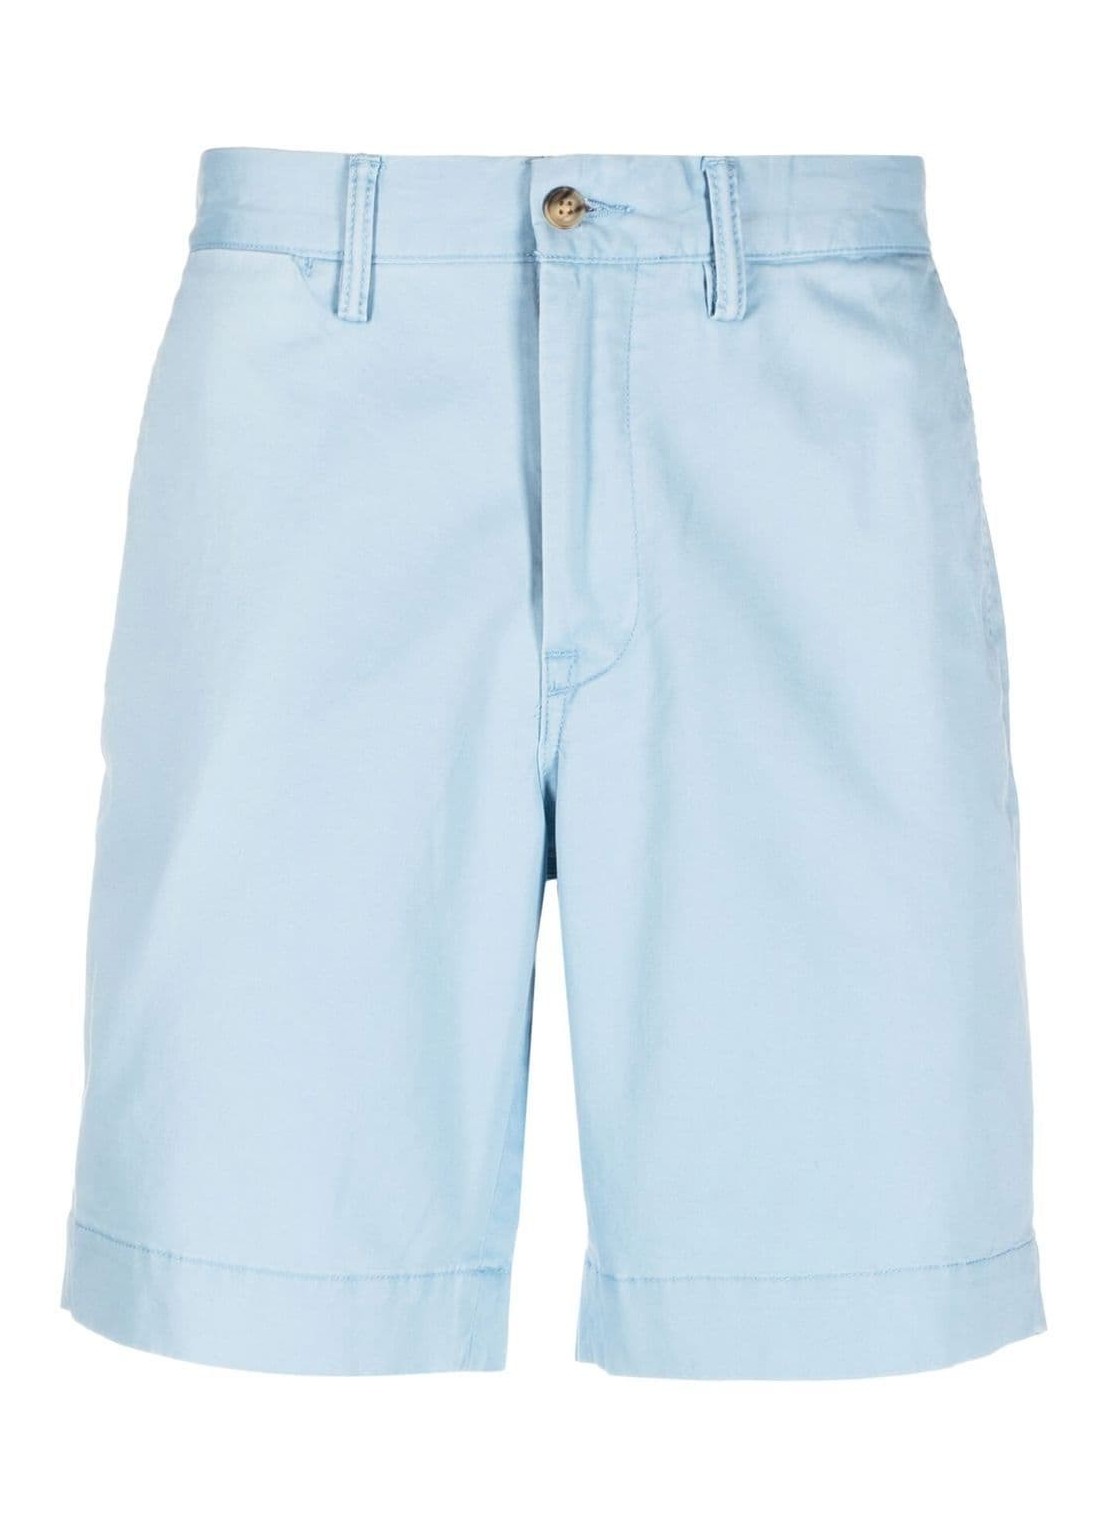 Pantalon corto polo ralph lauren short pant man stfbedford9s-flat-short 710799213037 powder blue tal